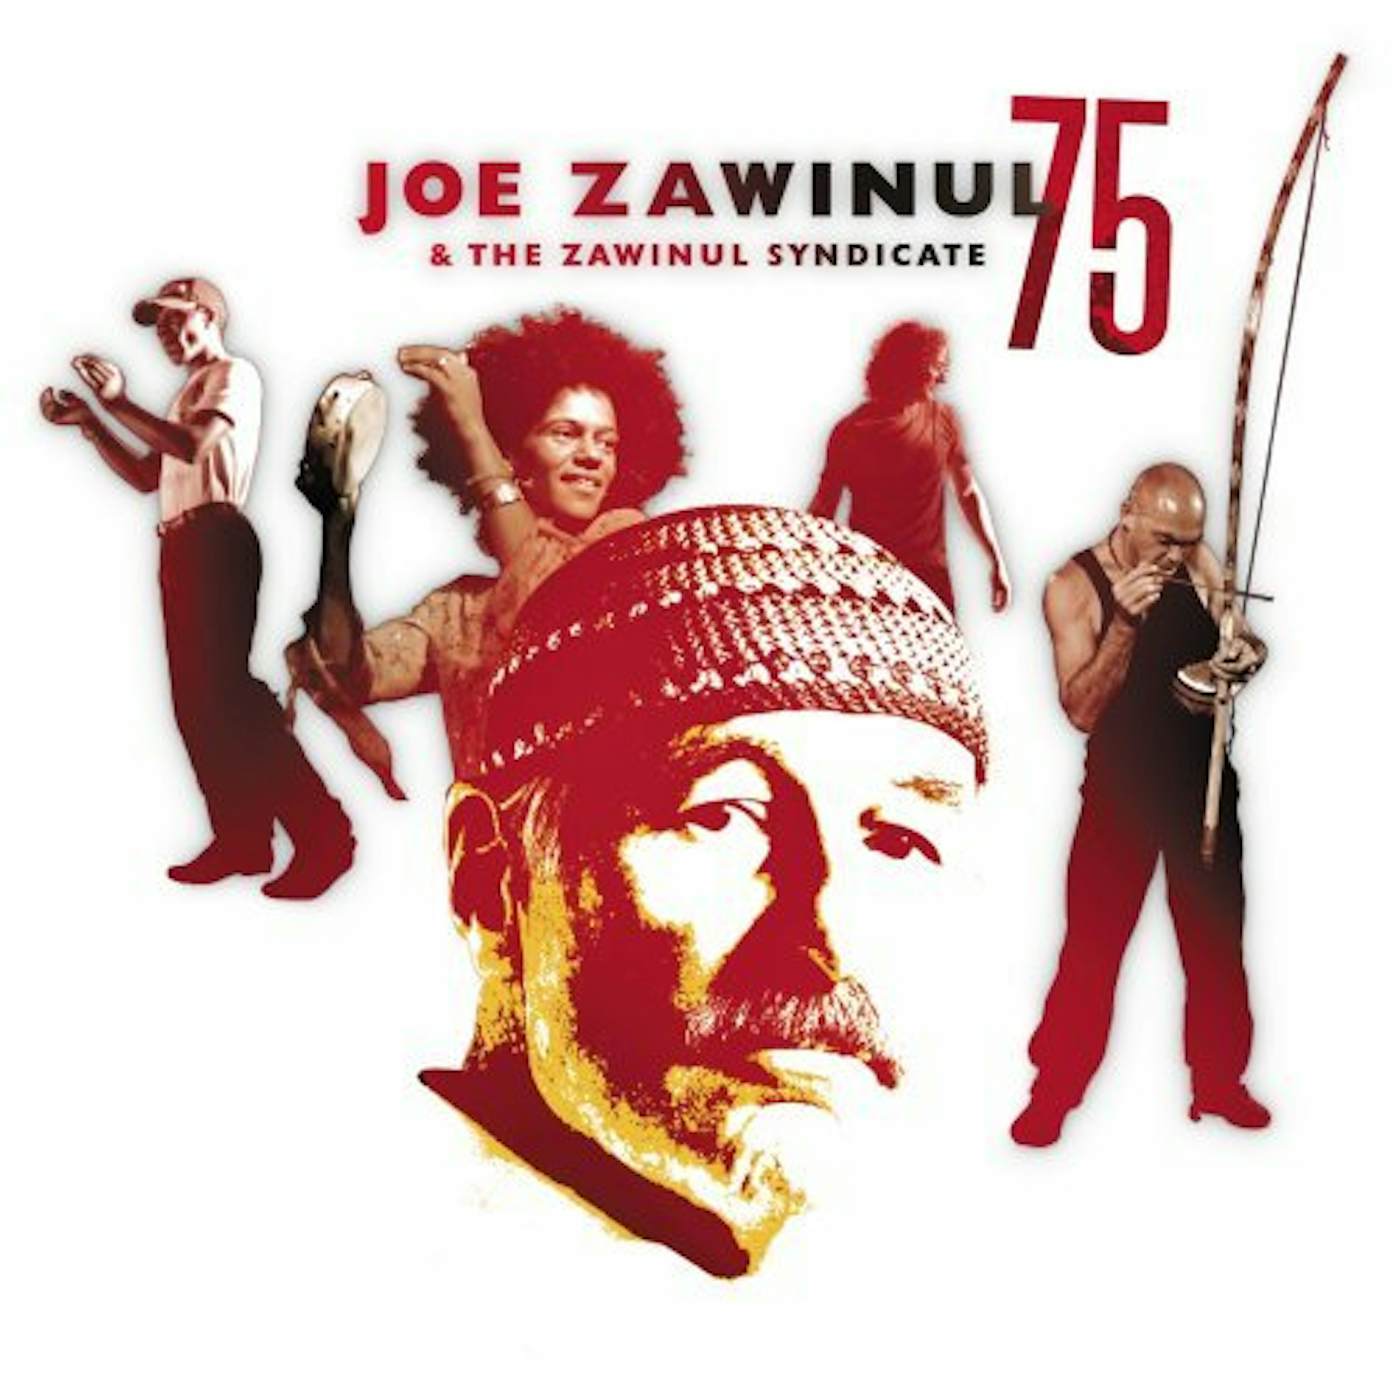 Joe Zawinul 75 CD